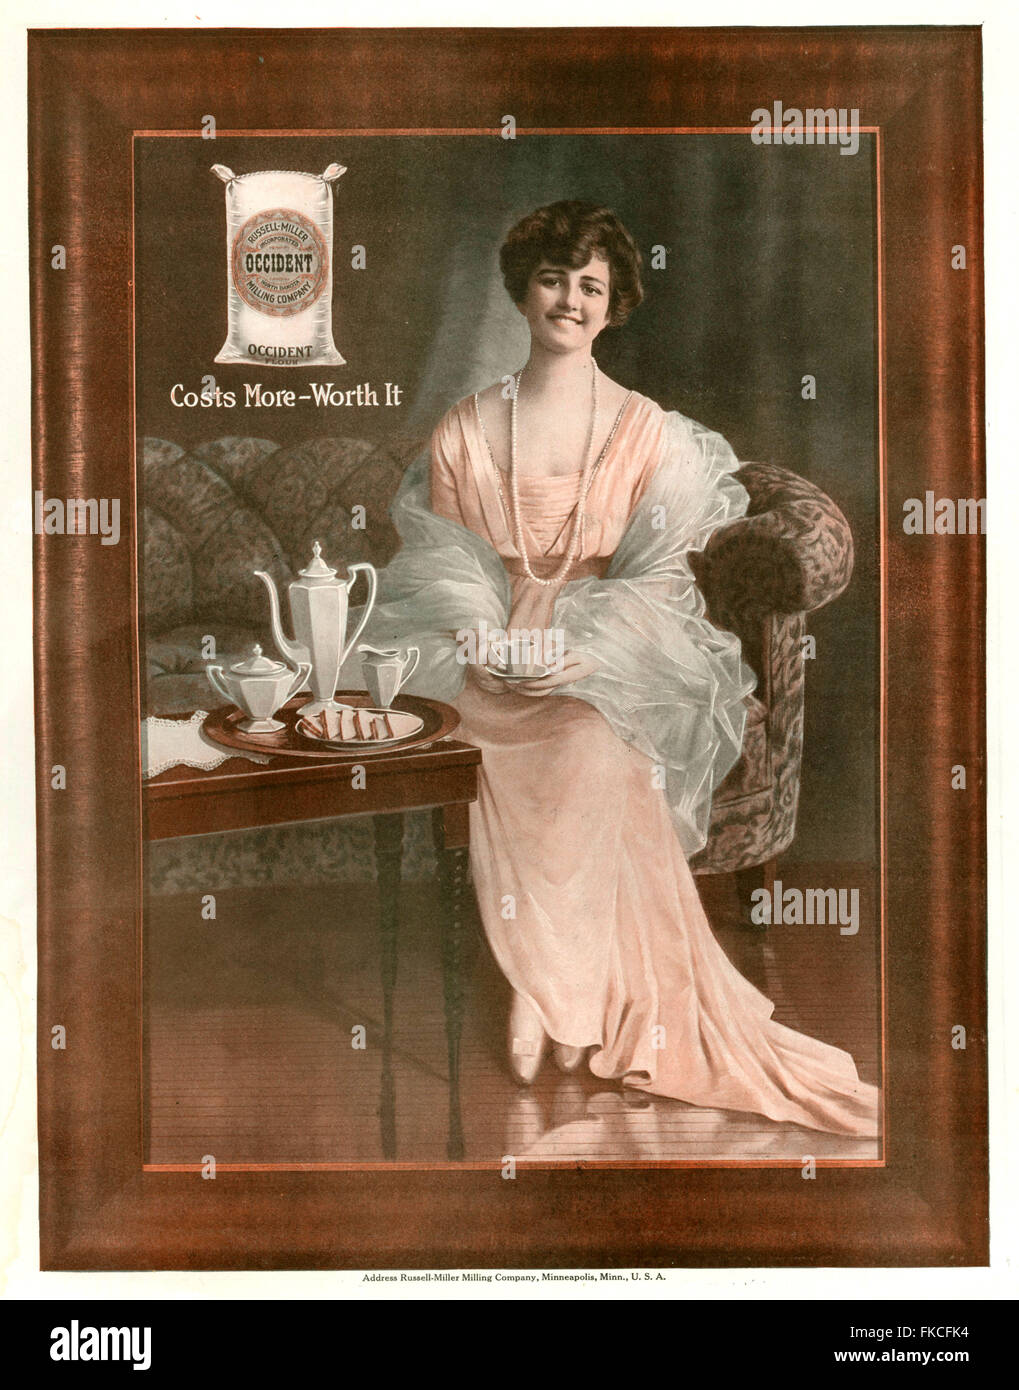 1920er Jahren USA Okzident Magazin Anzeige Stockfoto